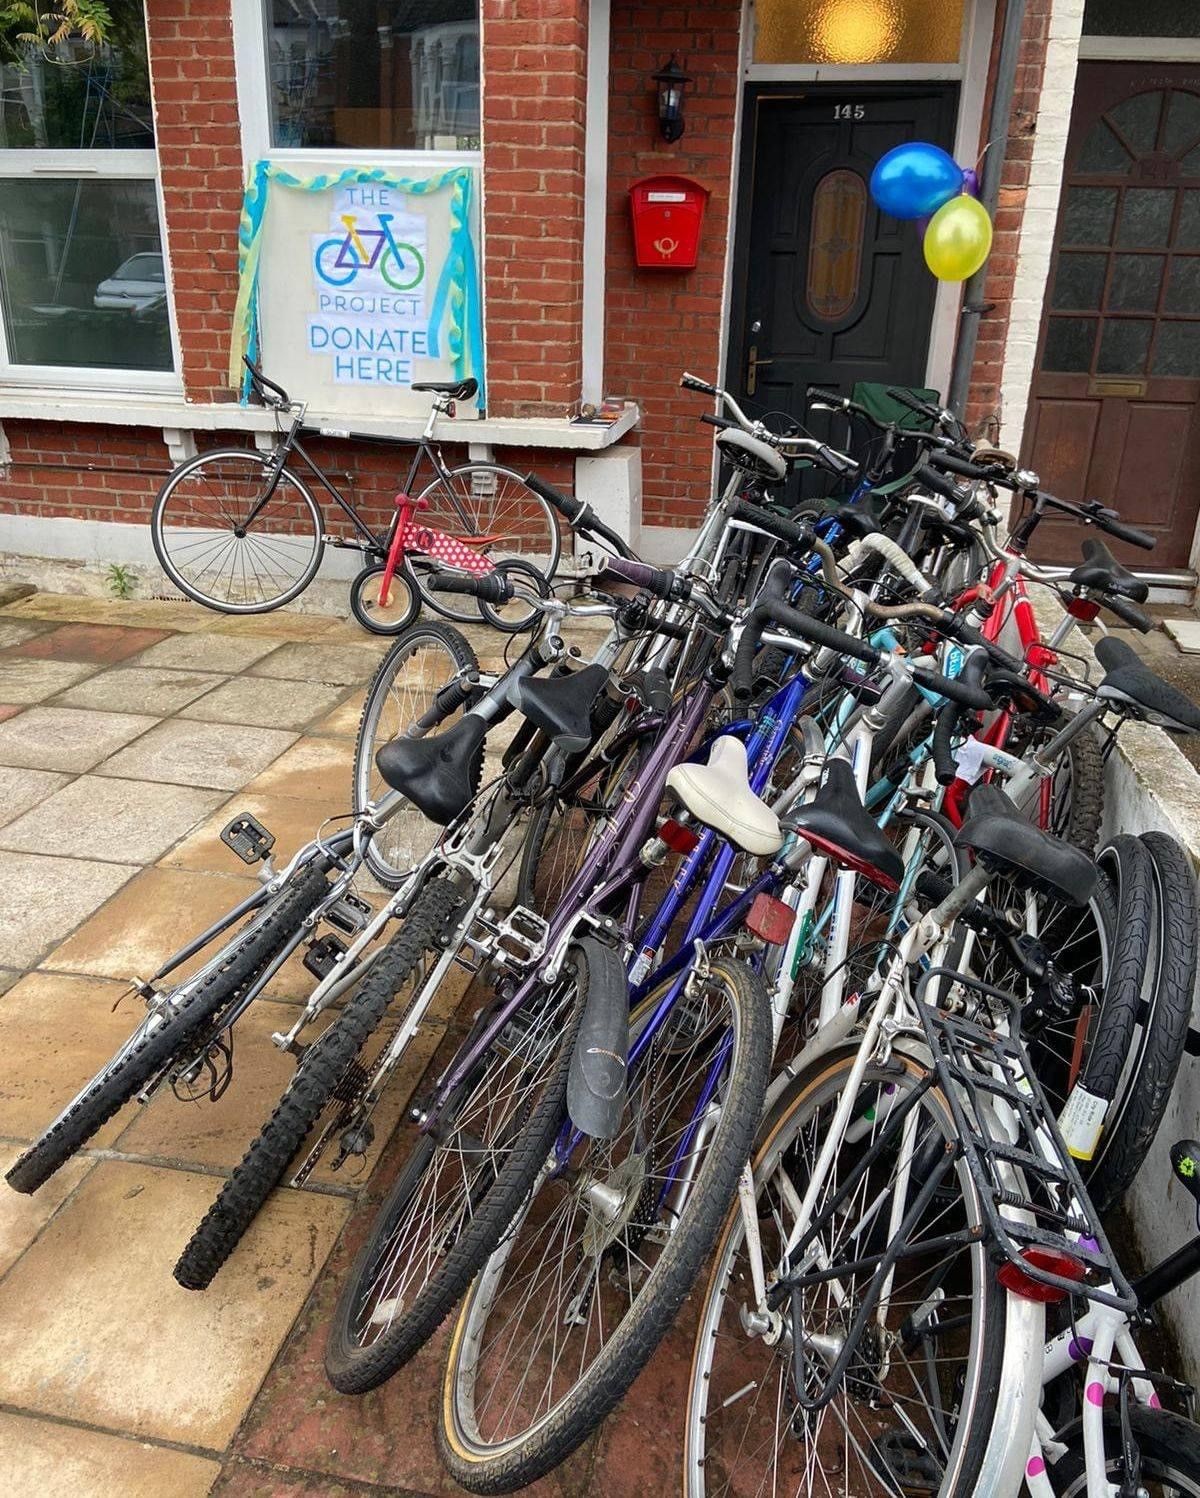 Western MCC donate funds to Birmingham Bike Project